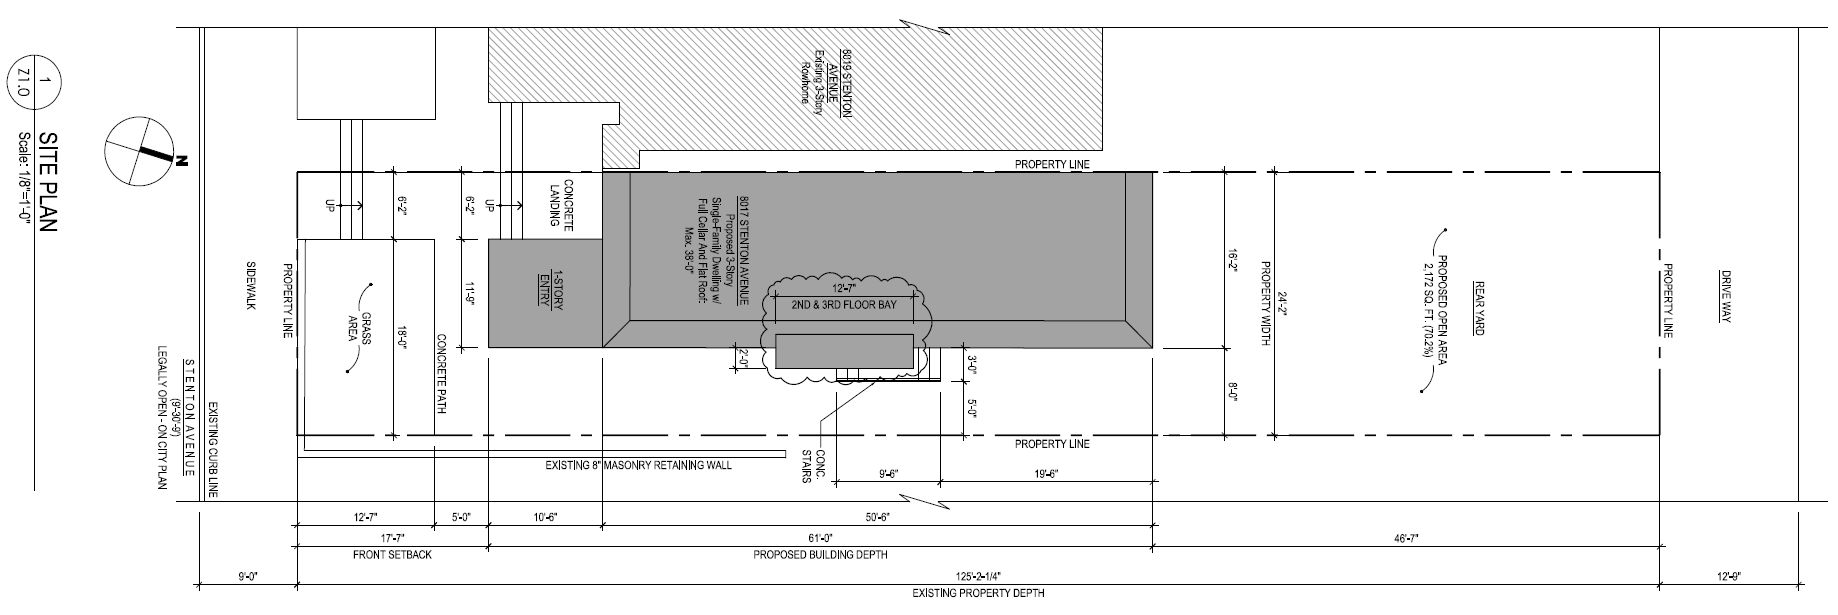 8017 Stenton Avenue. Site plan. Credit: 24/7 Design Group via the City of Philadelphia